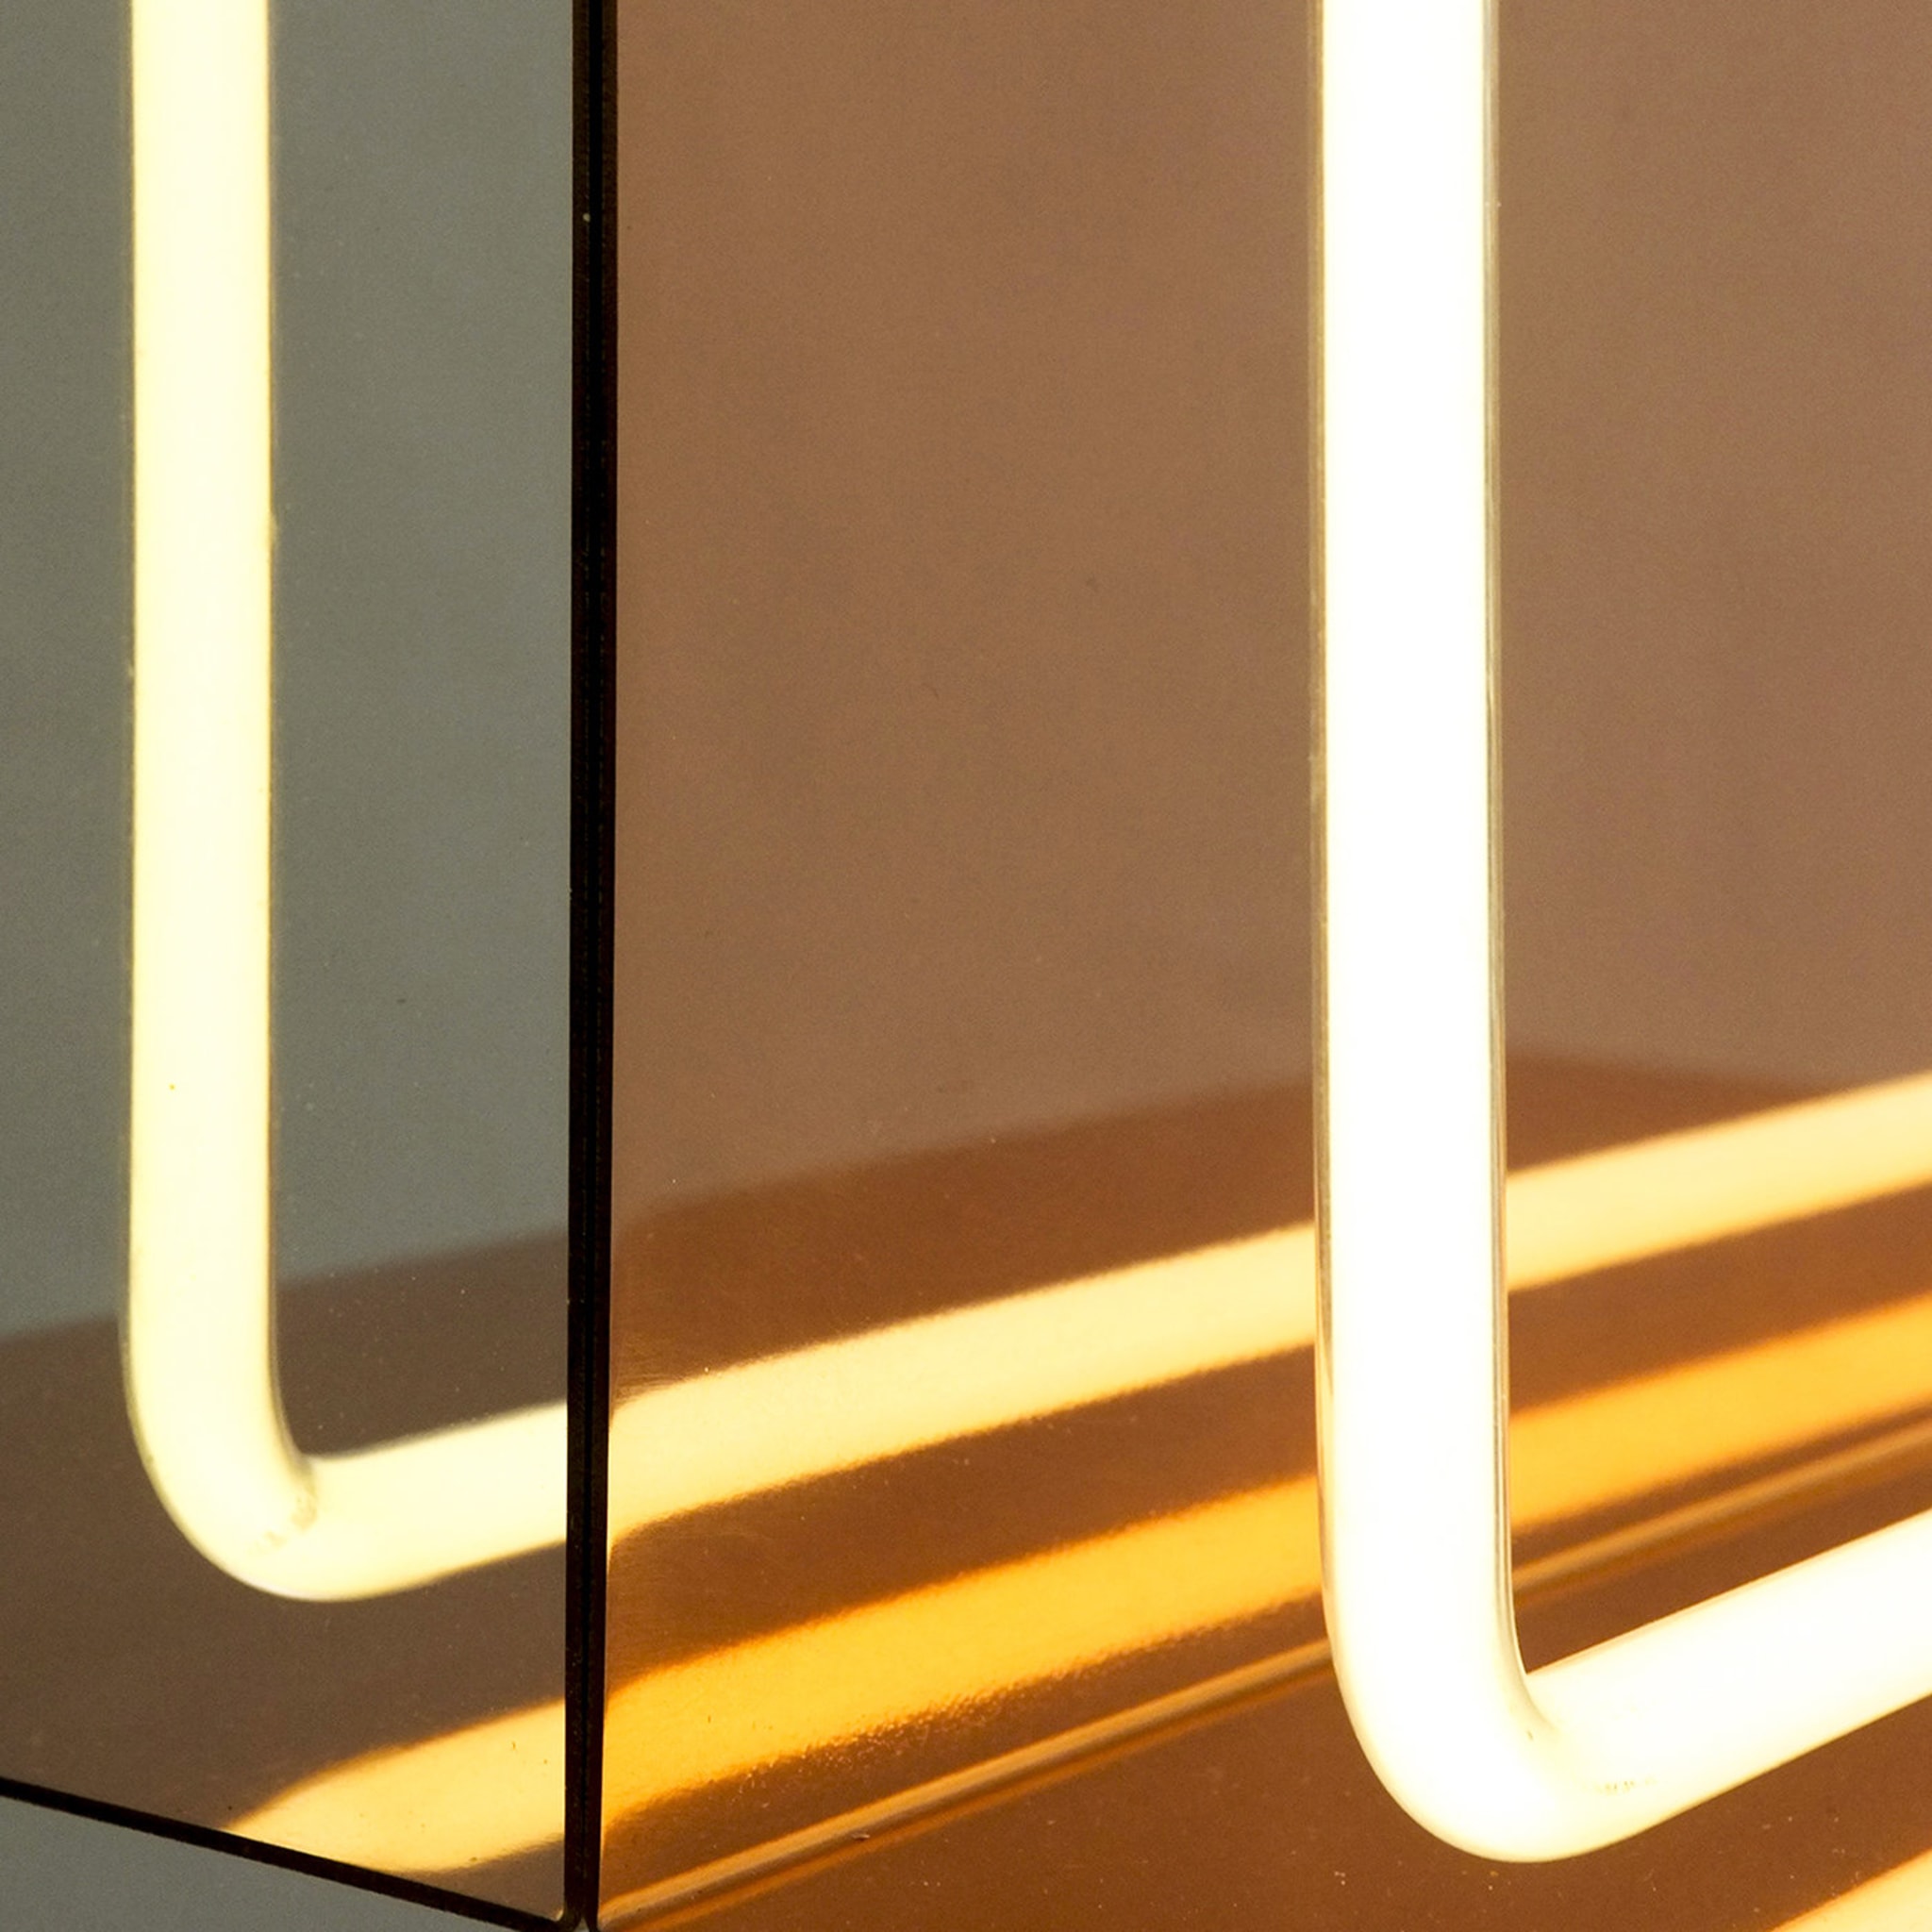 Luminous Panel #1 by Paolo Giordano and Ouwen Mori - Alternative view 1